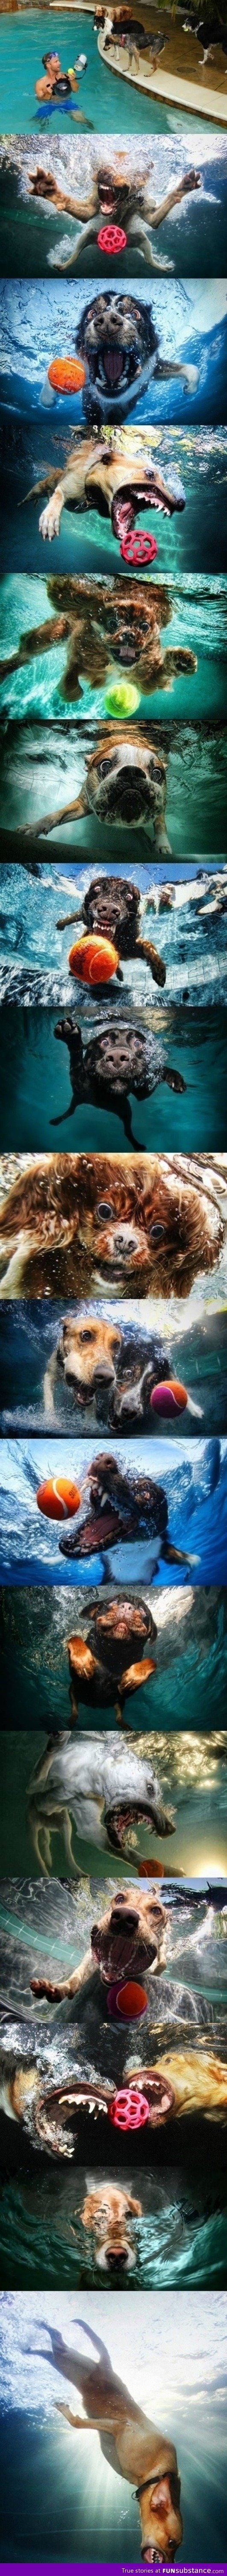 Dogs underwater